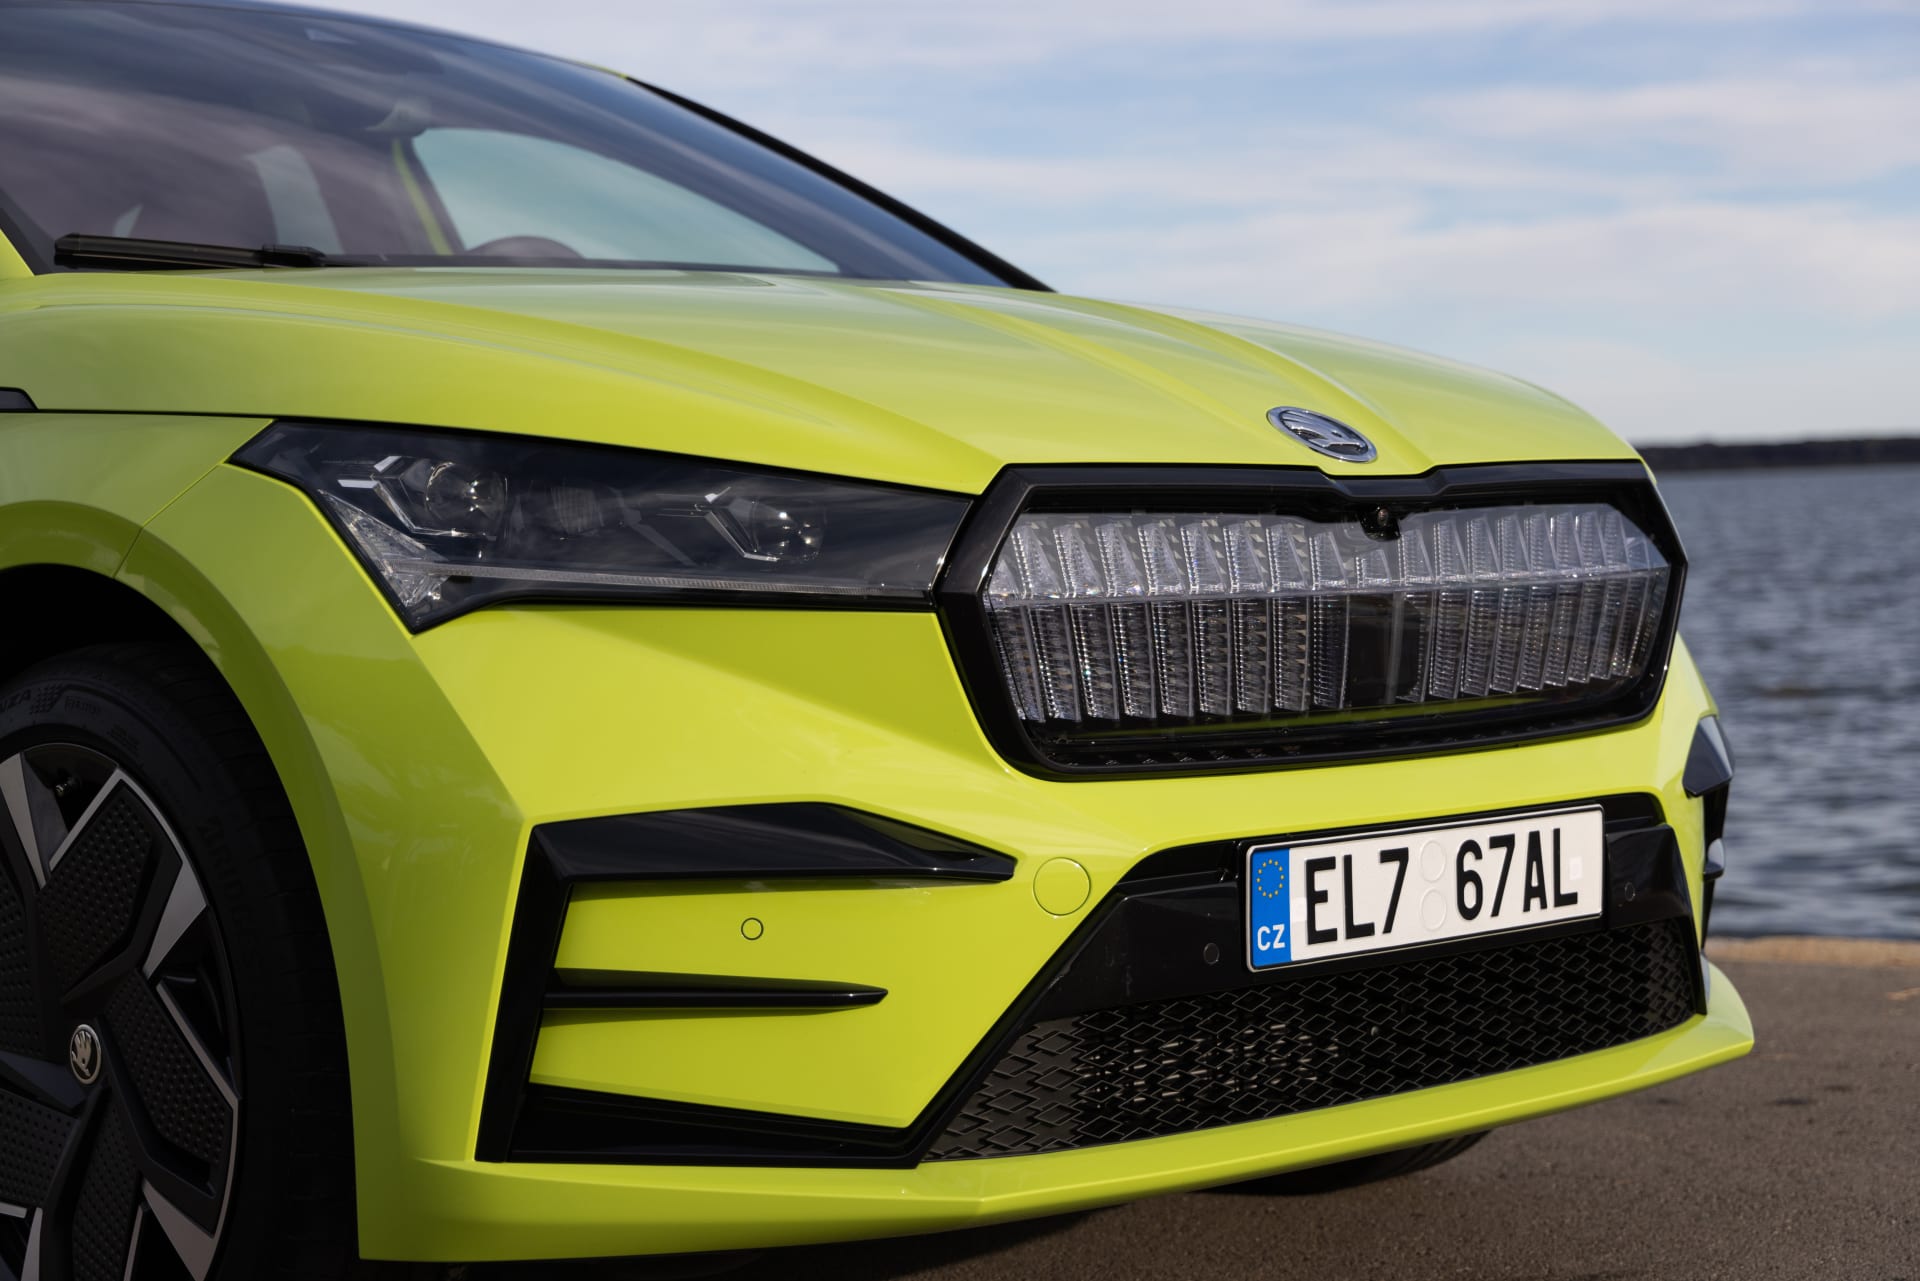 Škoda Enyaq Coupé RS iV